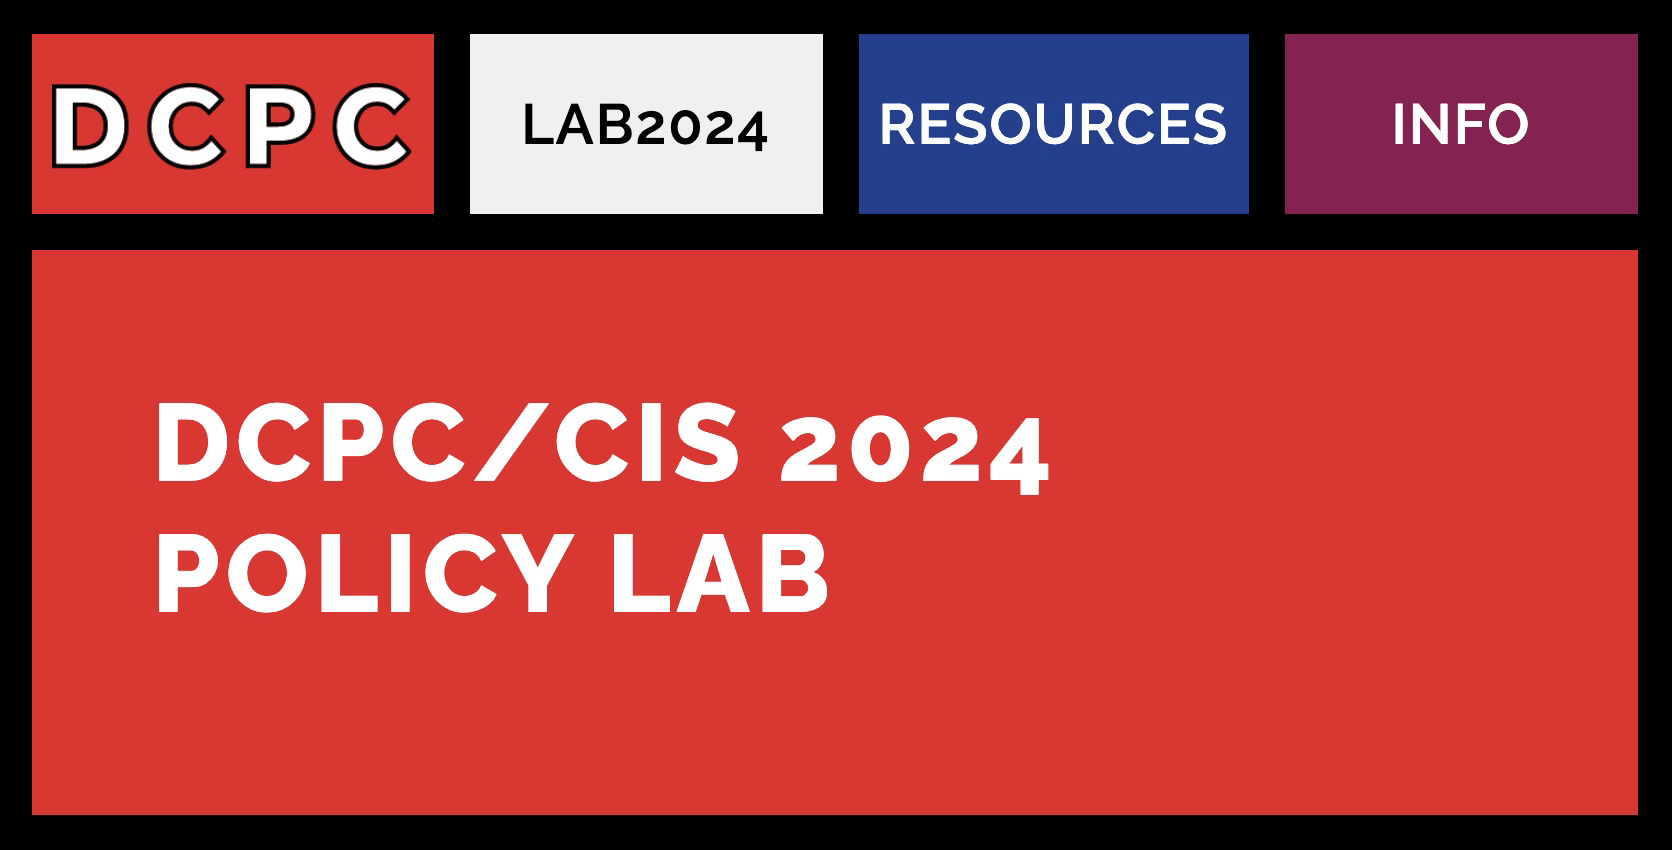 DCPC/CIS 2024 POLICY LAB